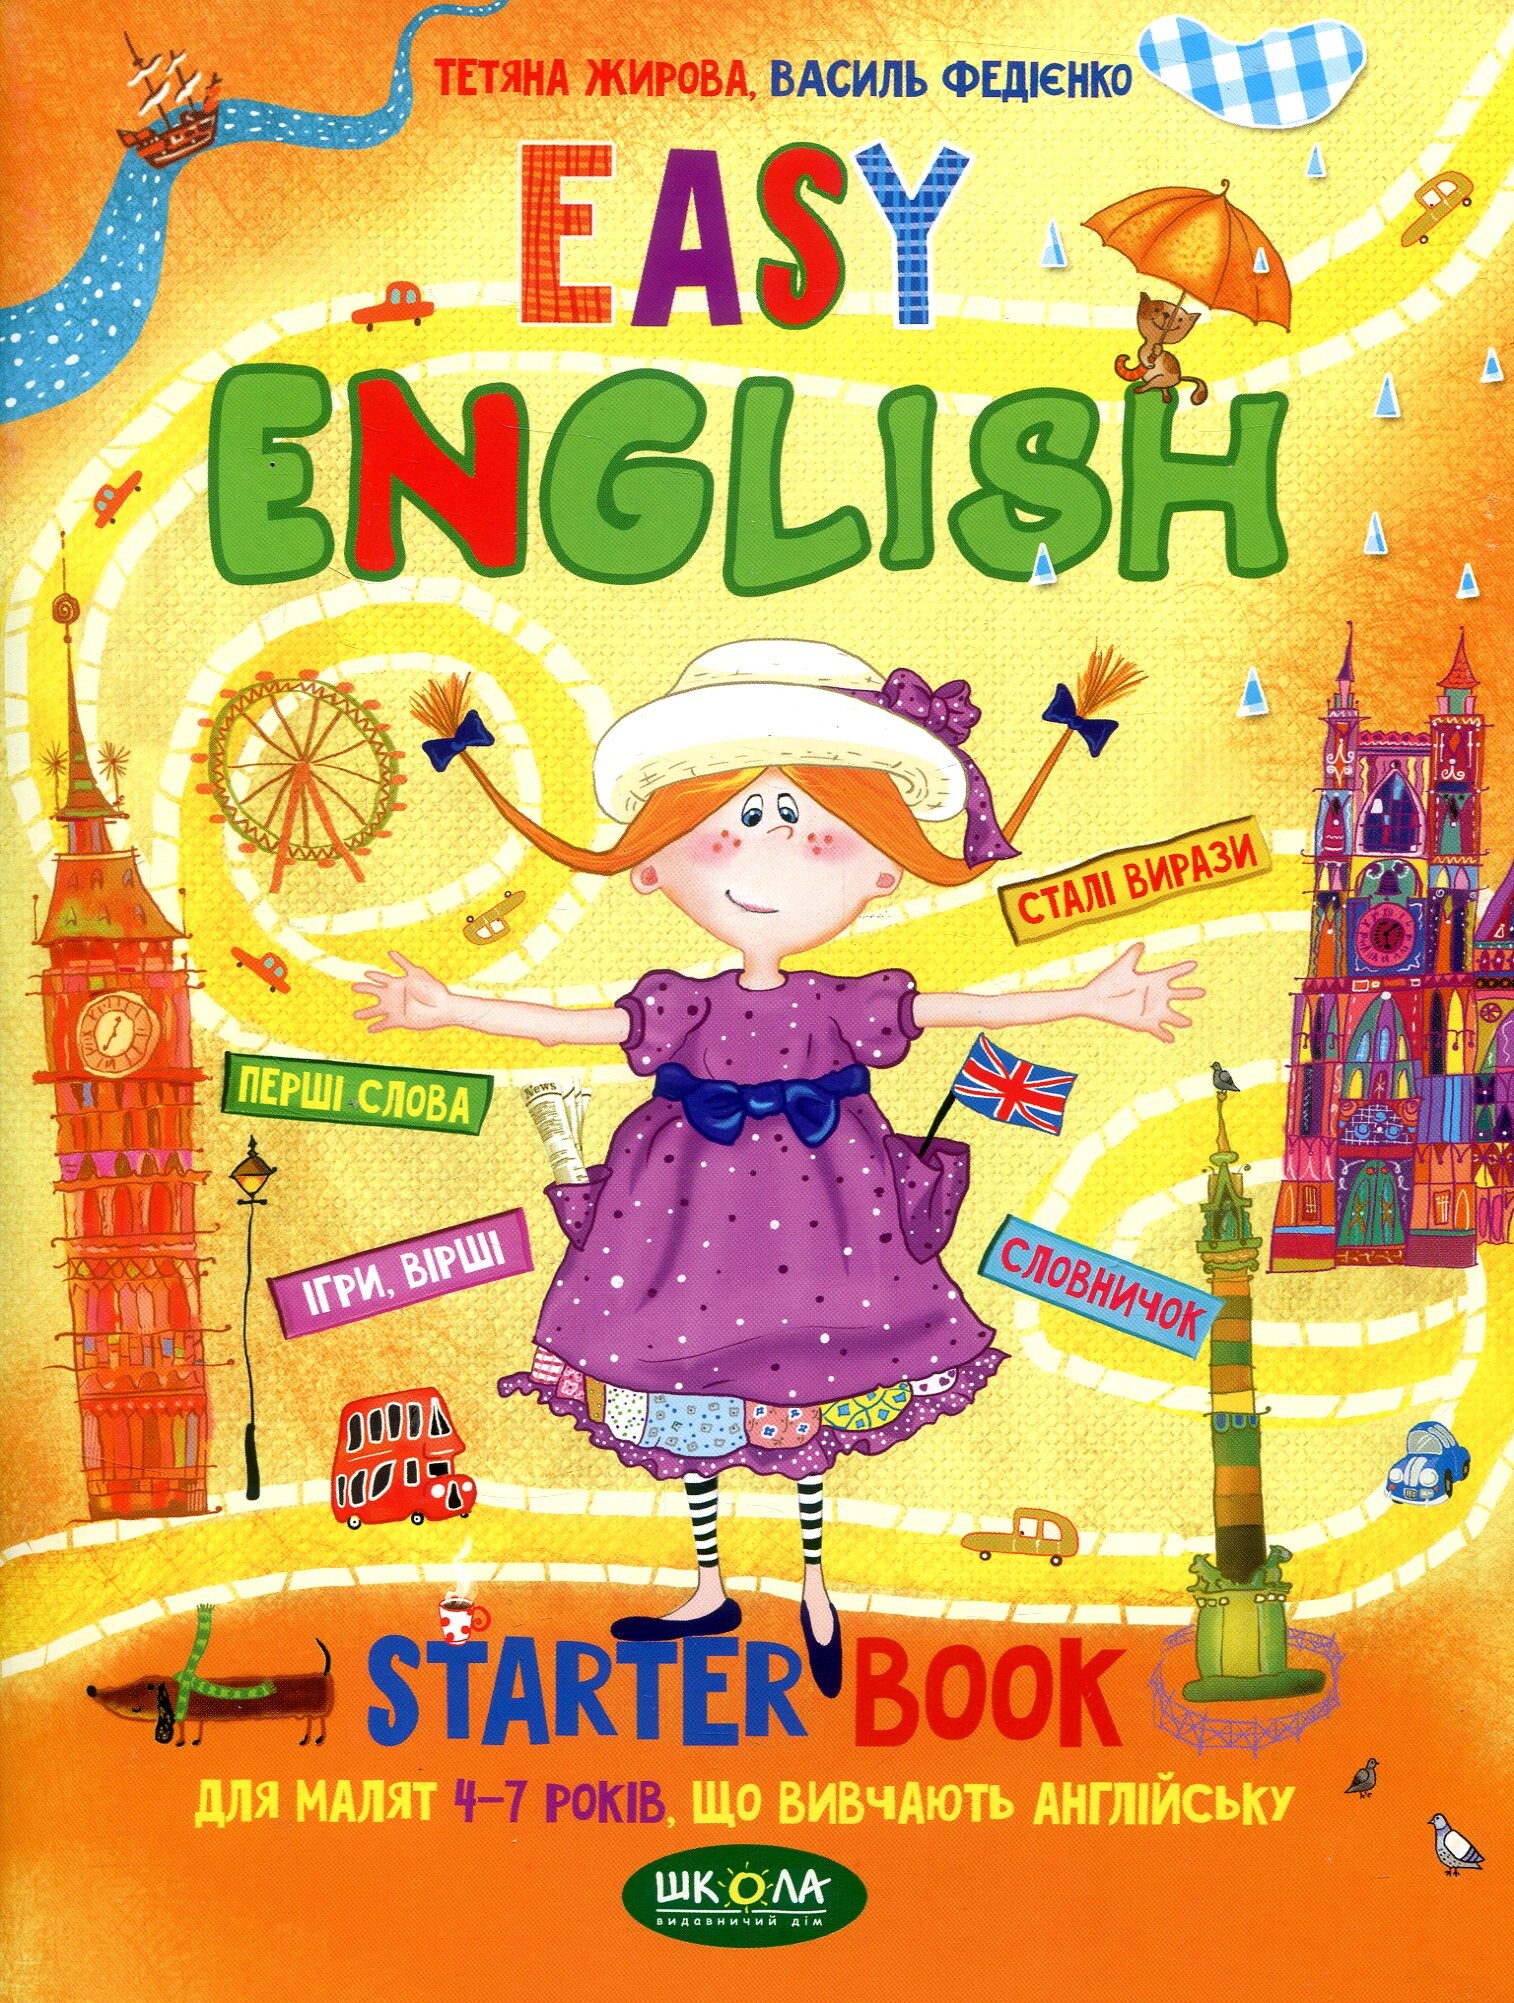 Easy English: starter book. Посібник для малят 4-7 років - Vivat